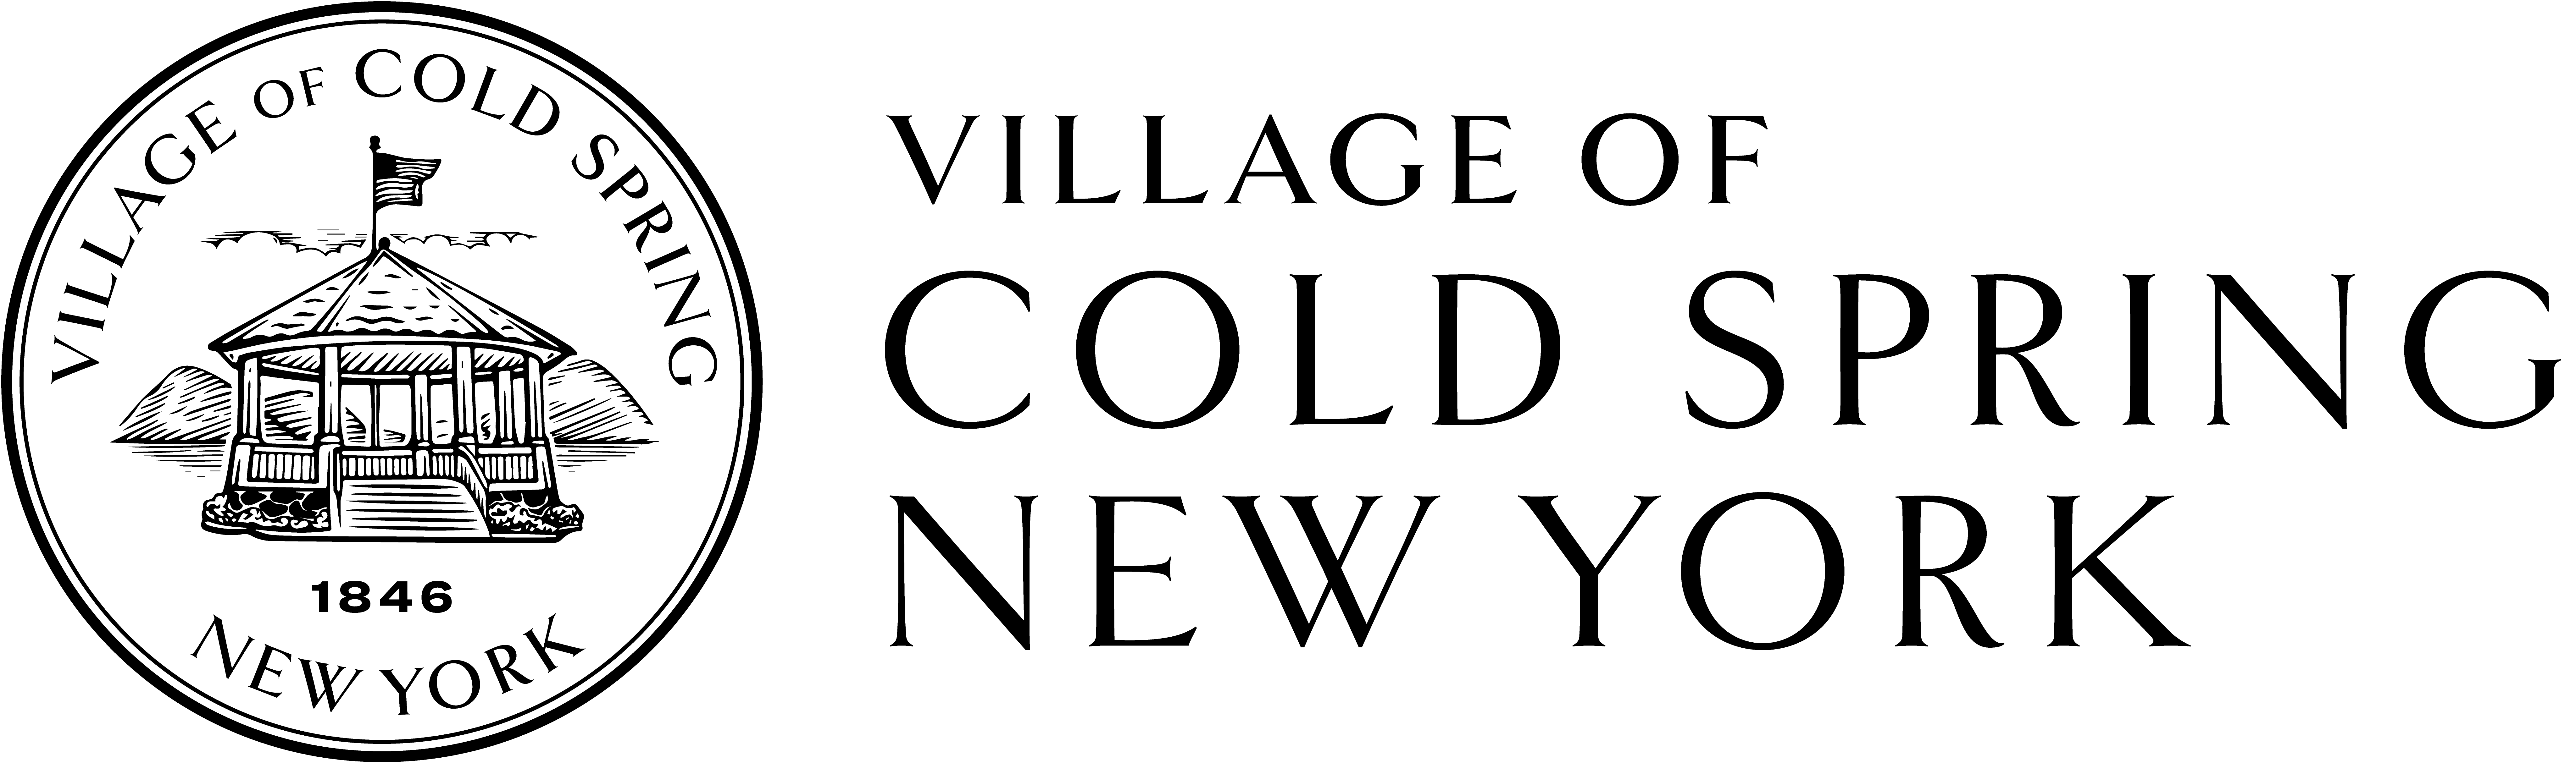 Cold Spring, New York, Lockup